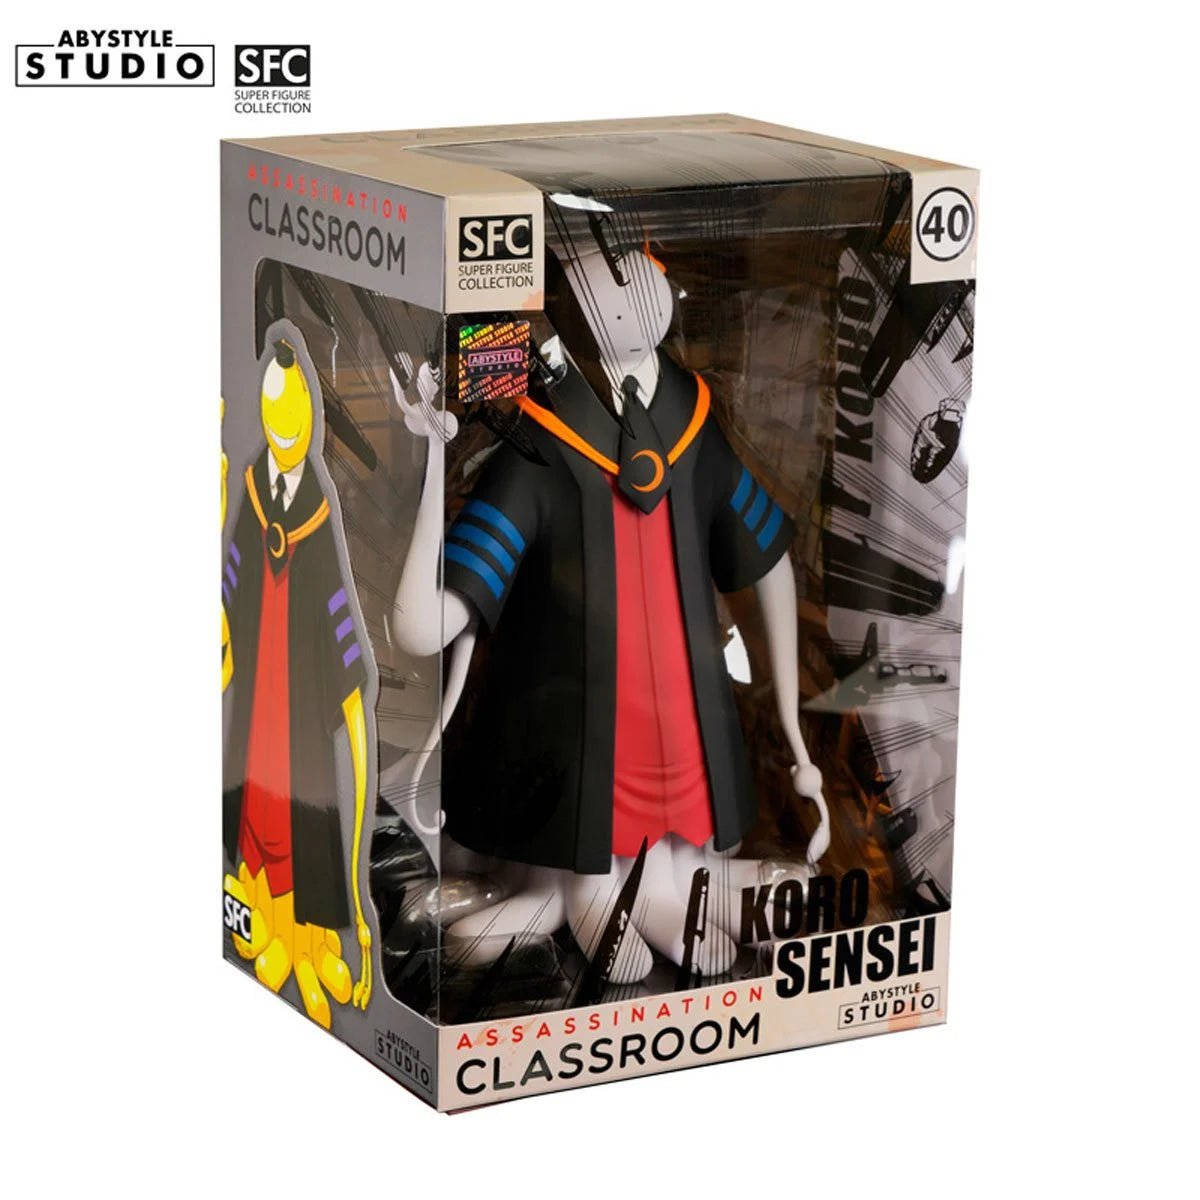 Abysse America - Koro-sensei White Variant Super Figure Collection Statue (Assassination Classroom) - Good Game Anime